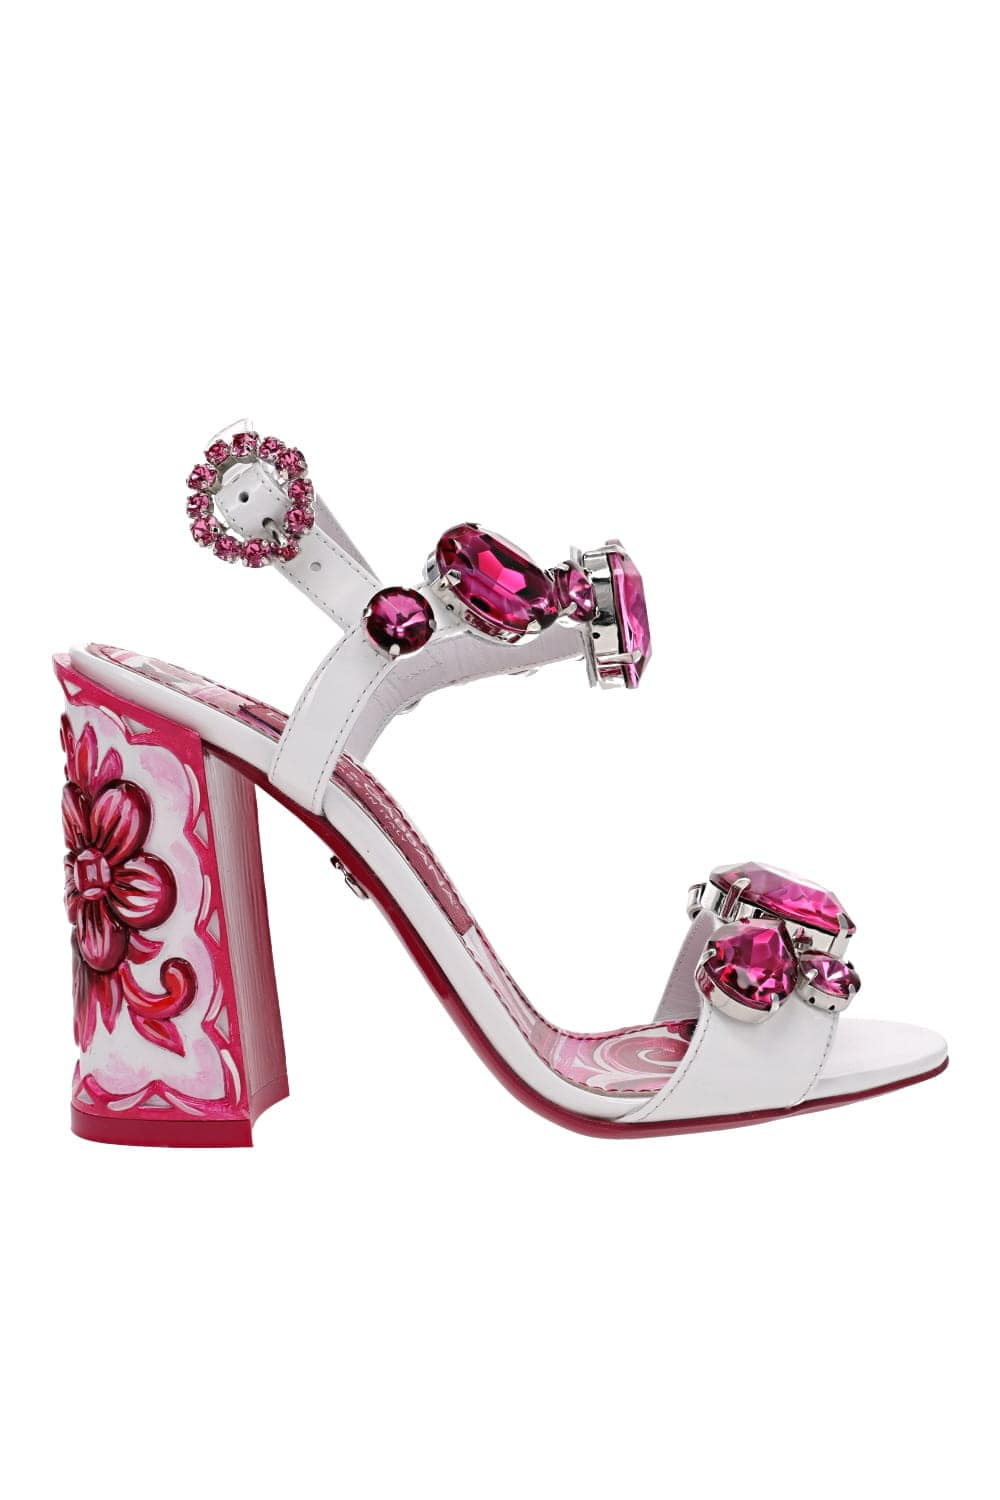 Dolce & Gabbana Jeweled Floral Heeled Sandals